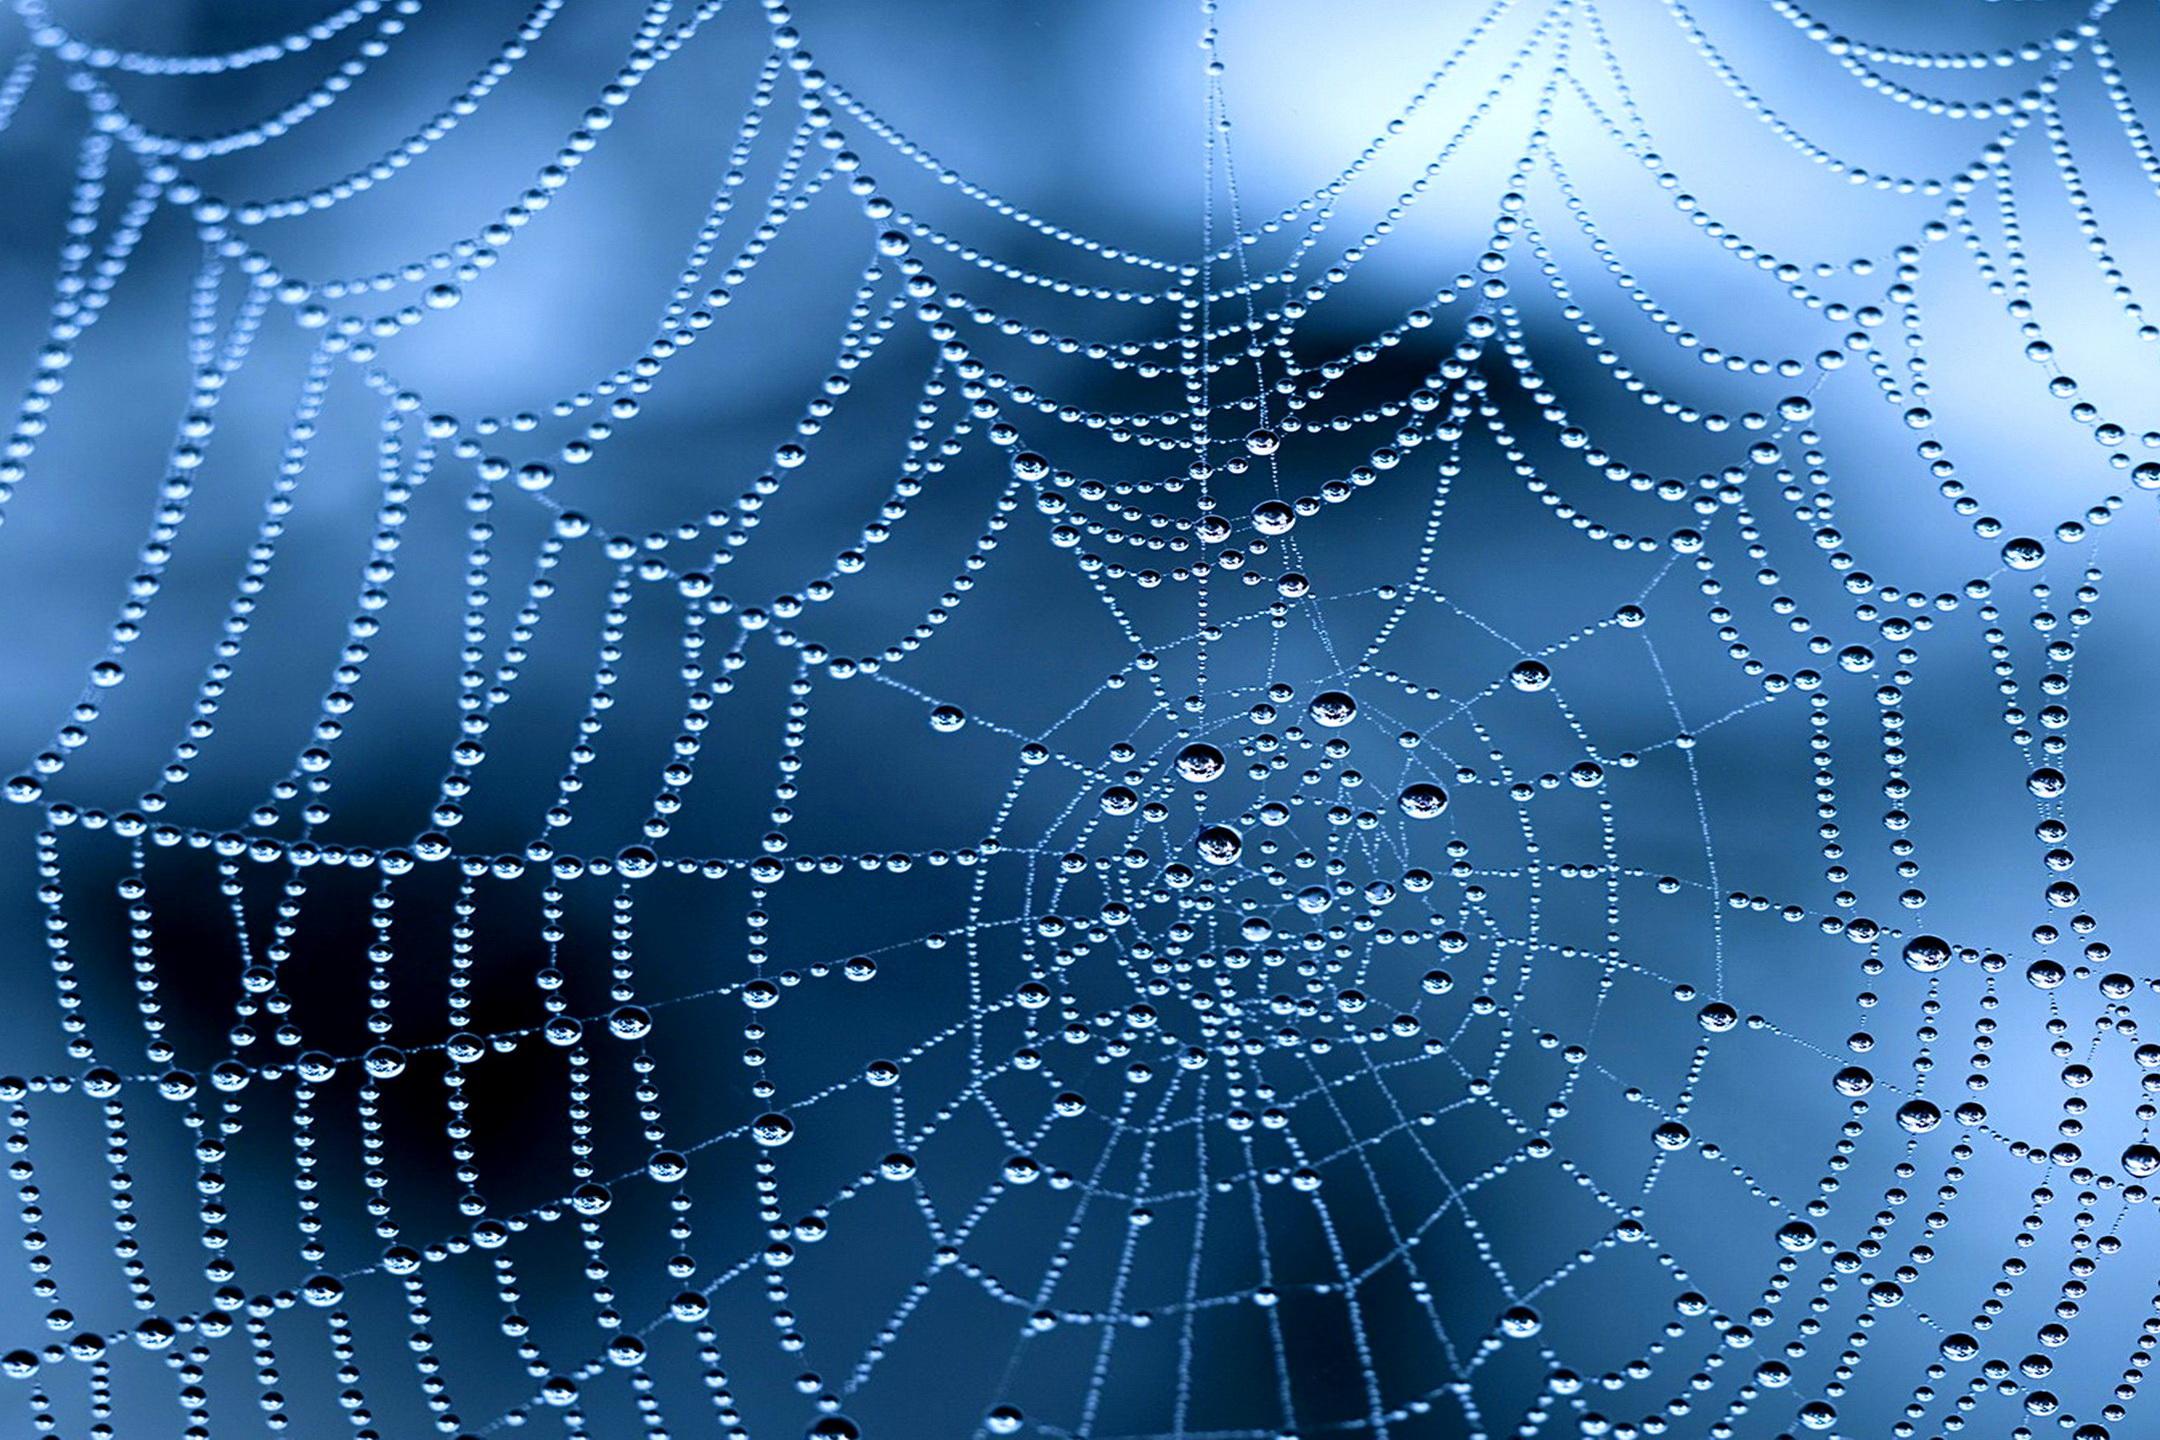 Spider Web Close Up Water Drop Dew Drop 2160x1440